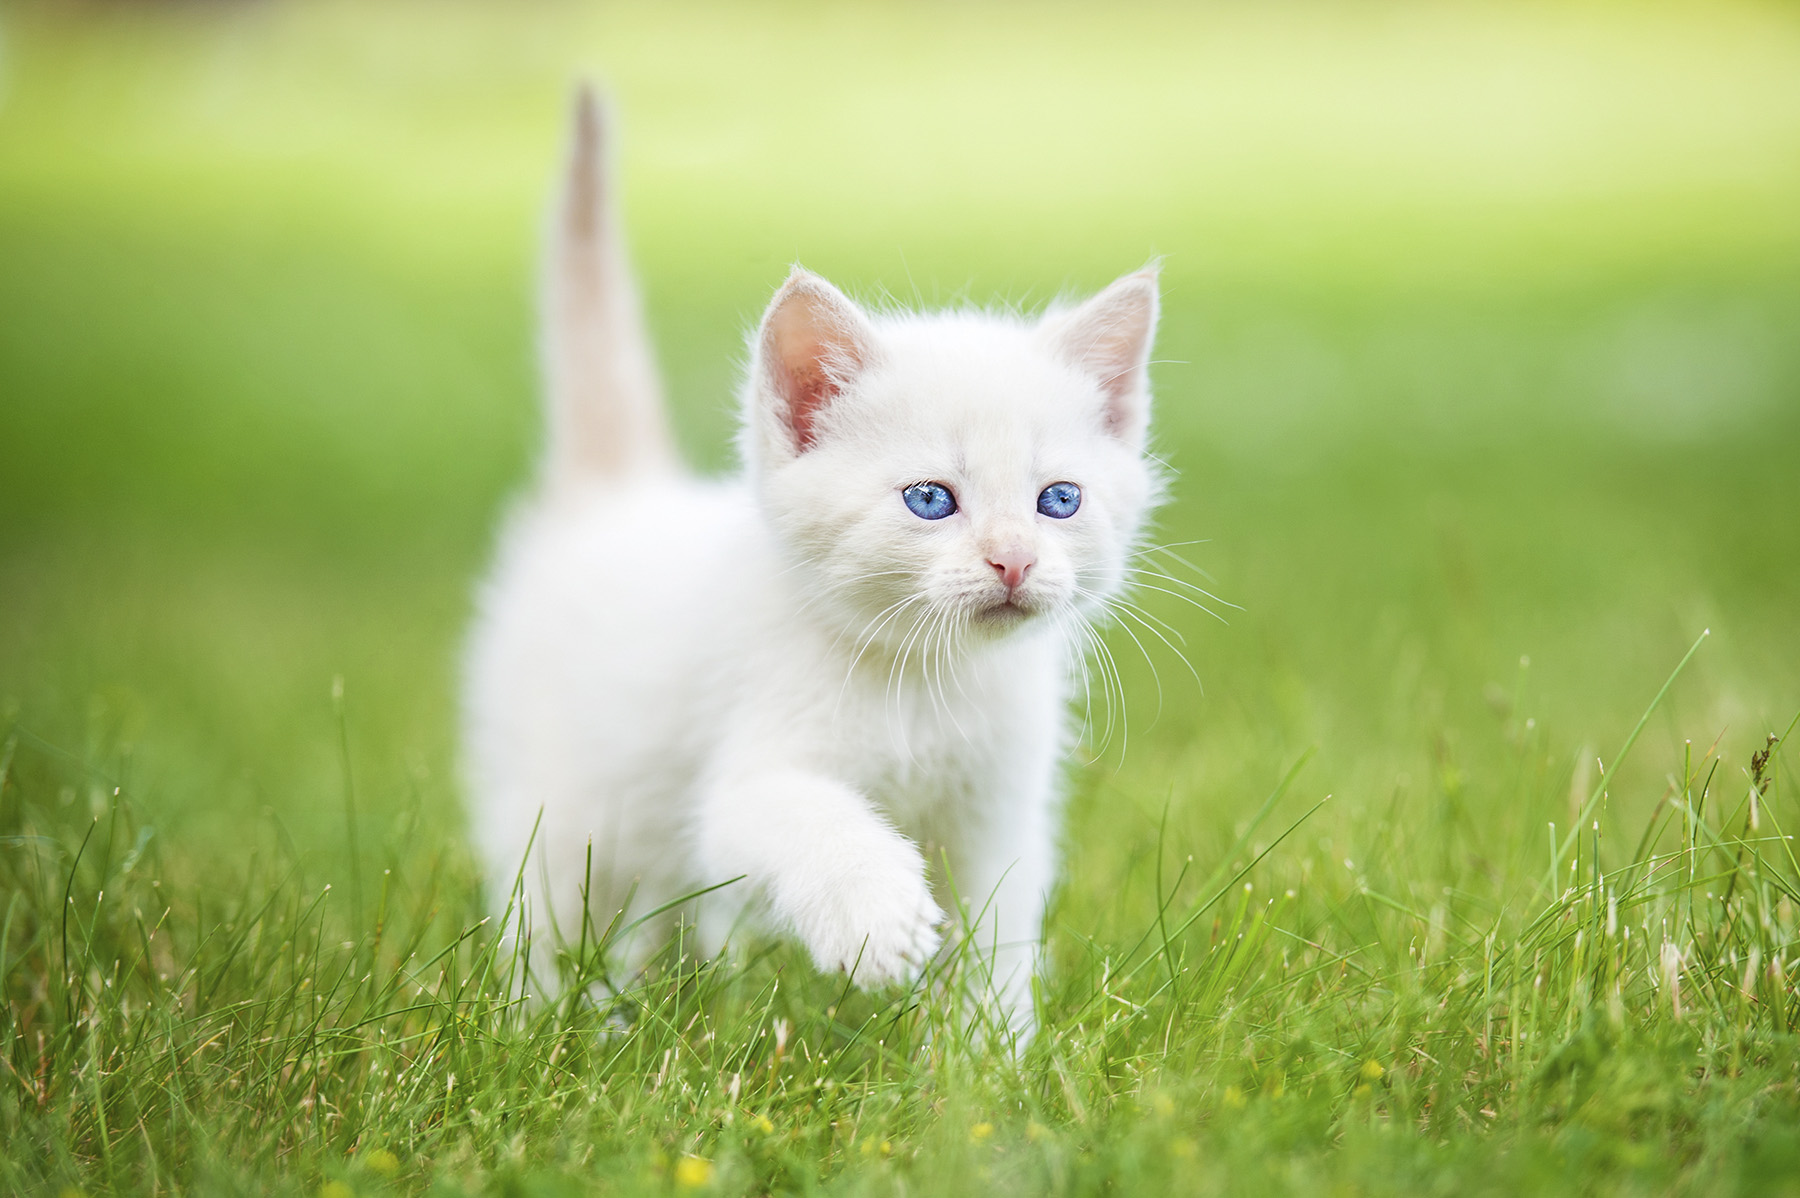 A fluffy white kitten with blue eyes walking through green grass battling fleas in Texas